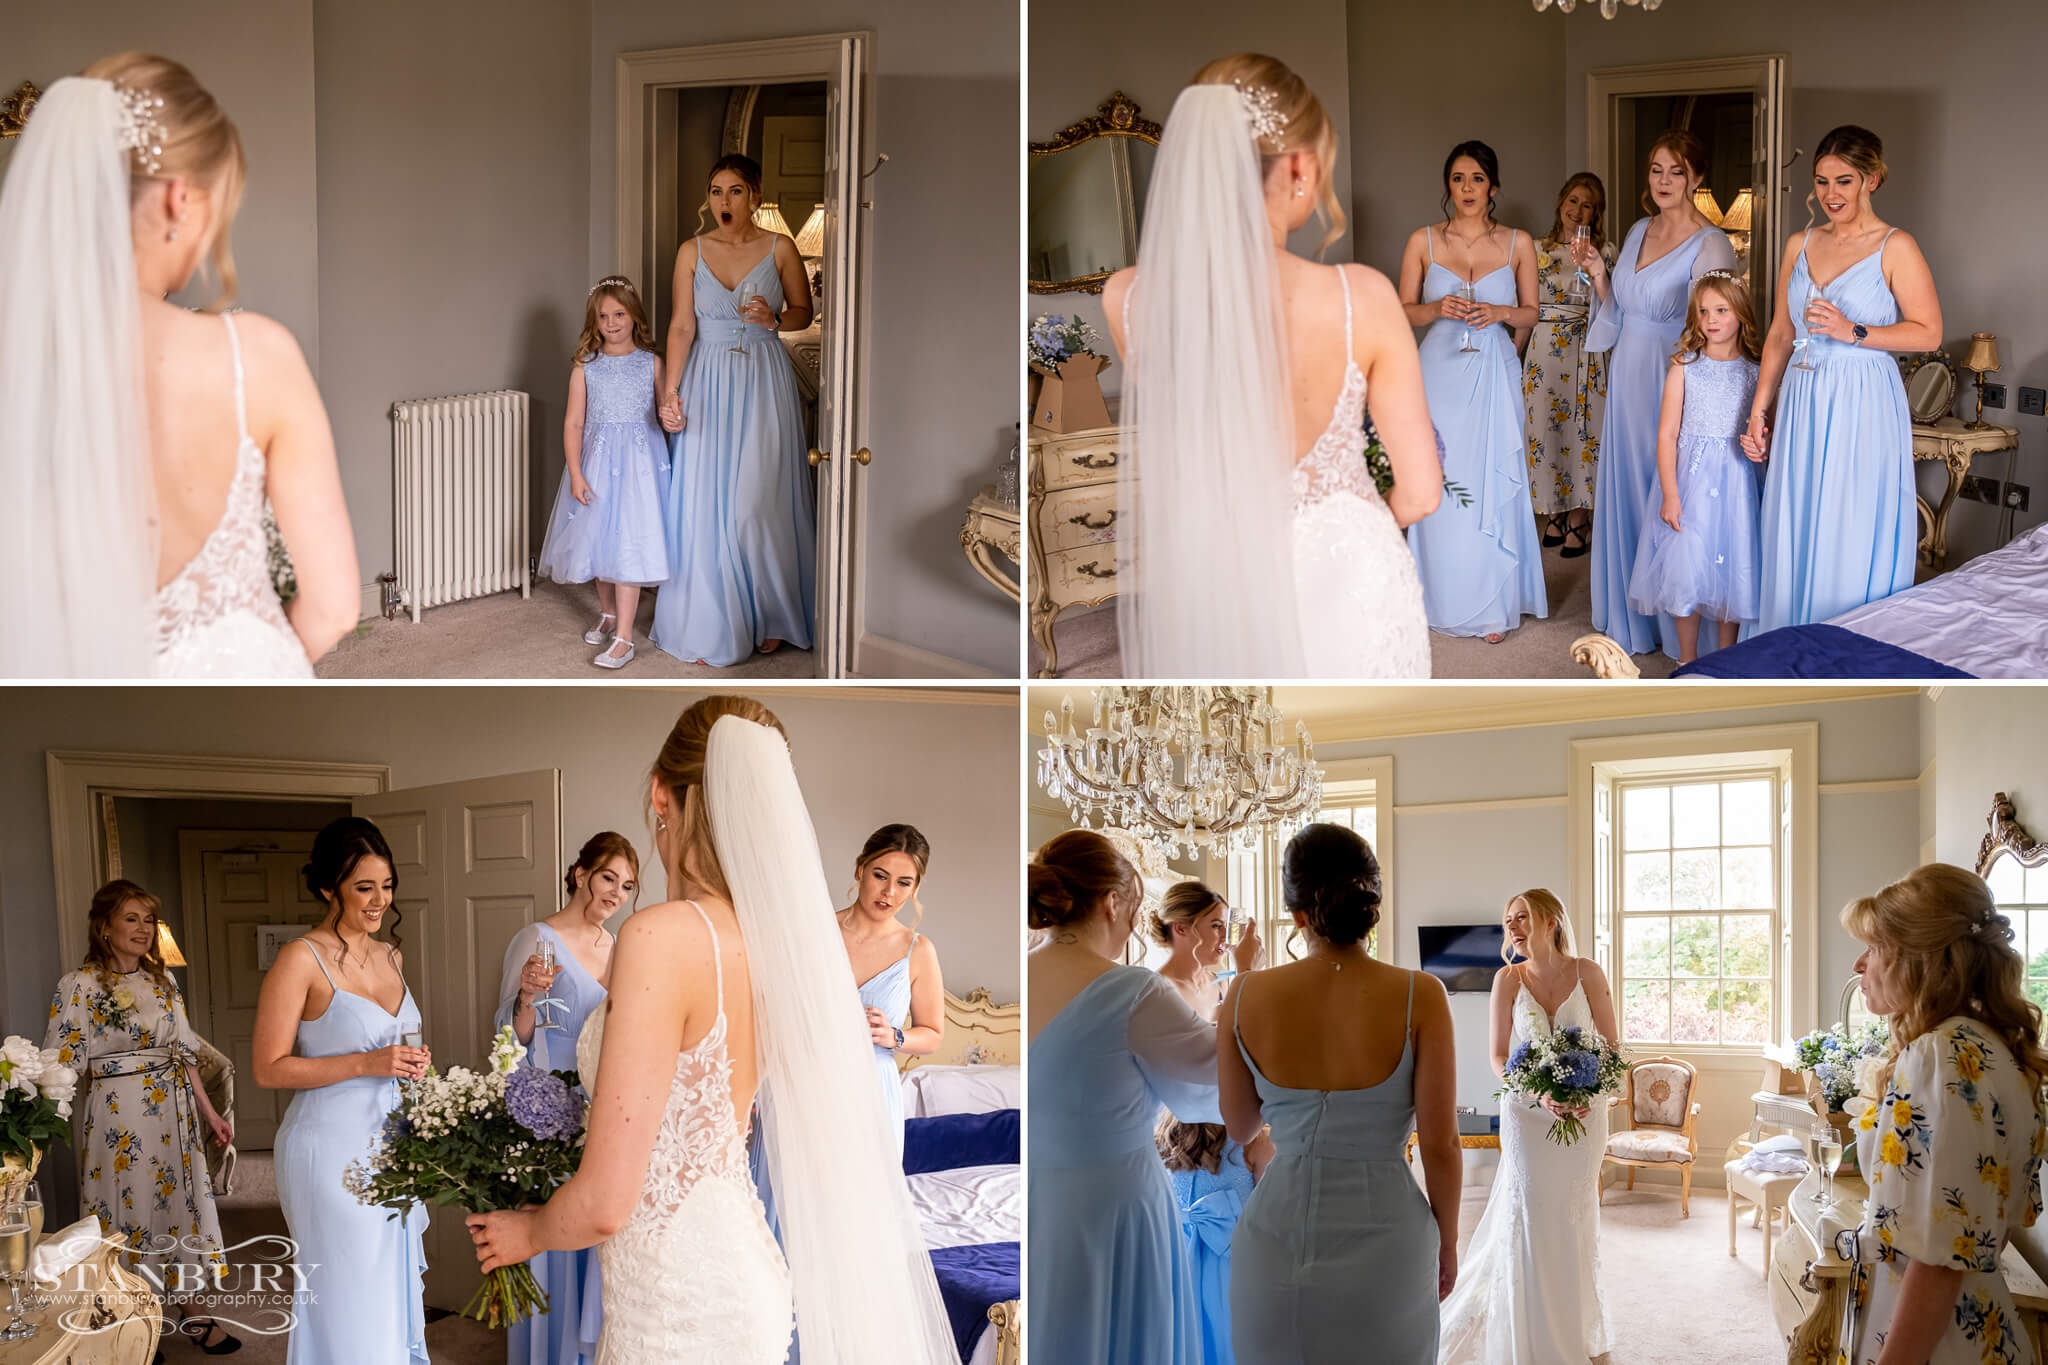 boho-bride-newton-hall-northumberland-stanbury-wedding-photography